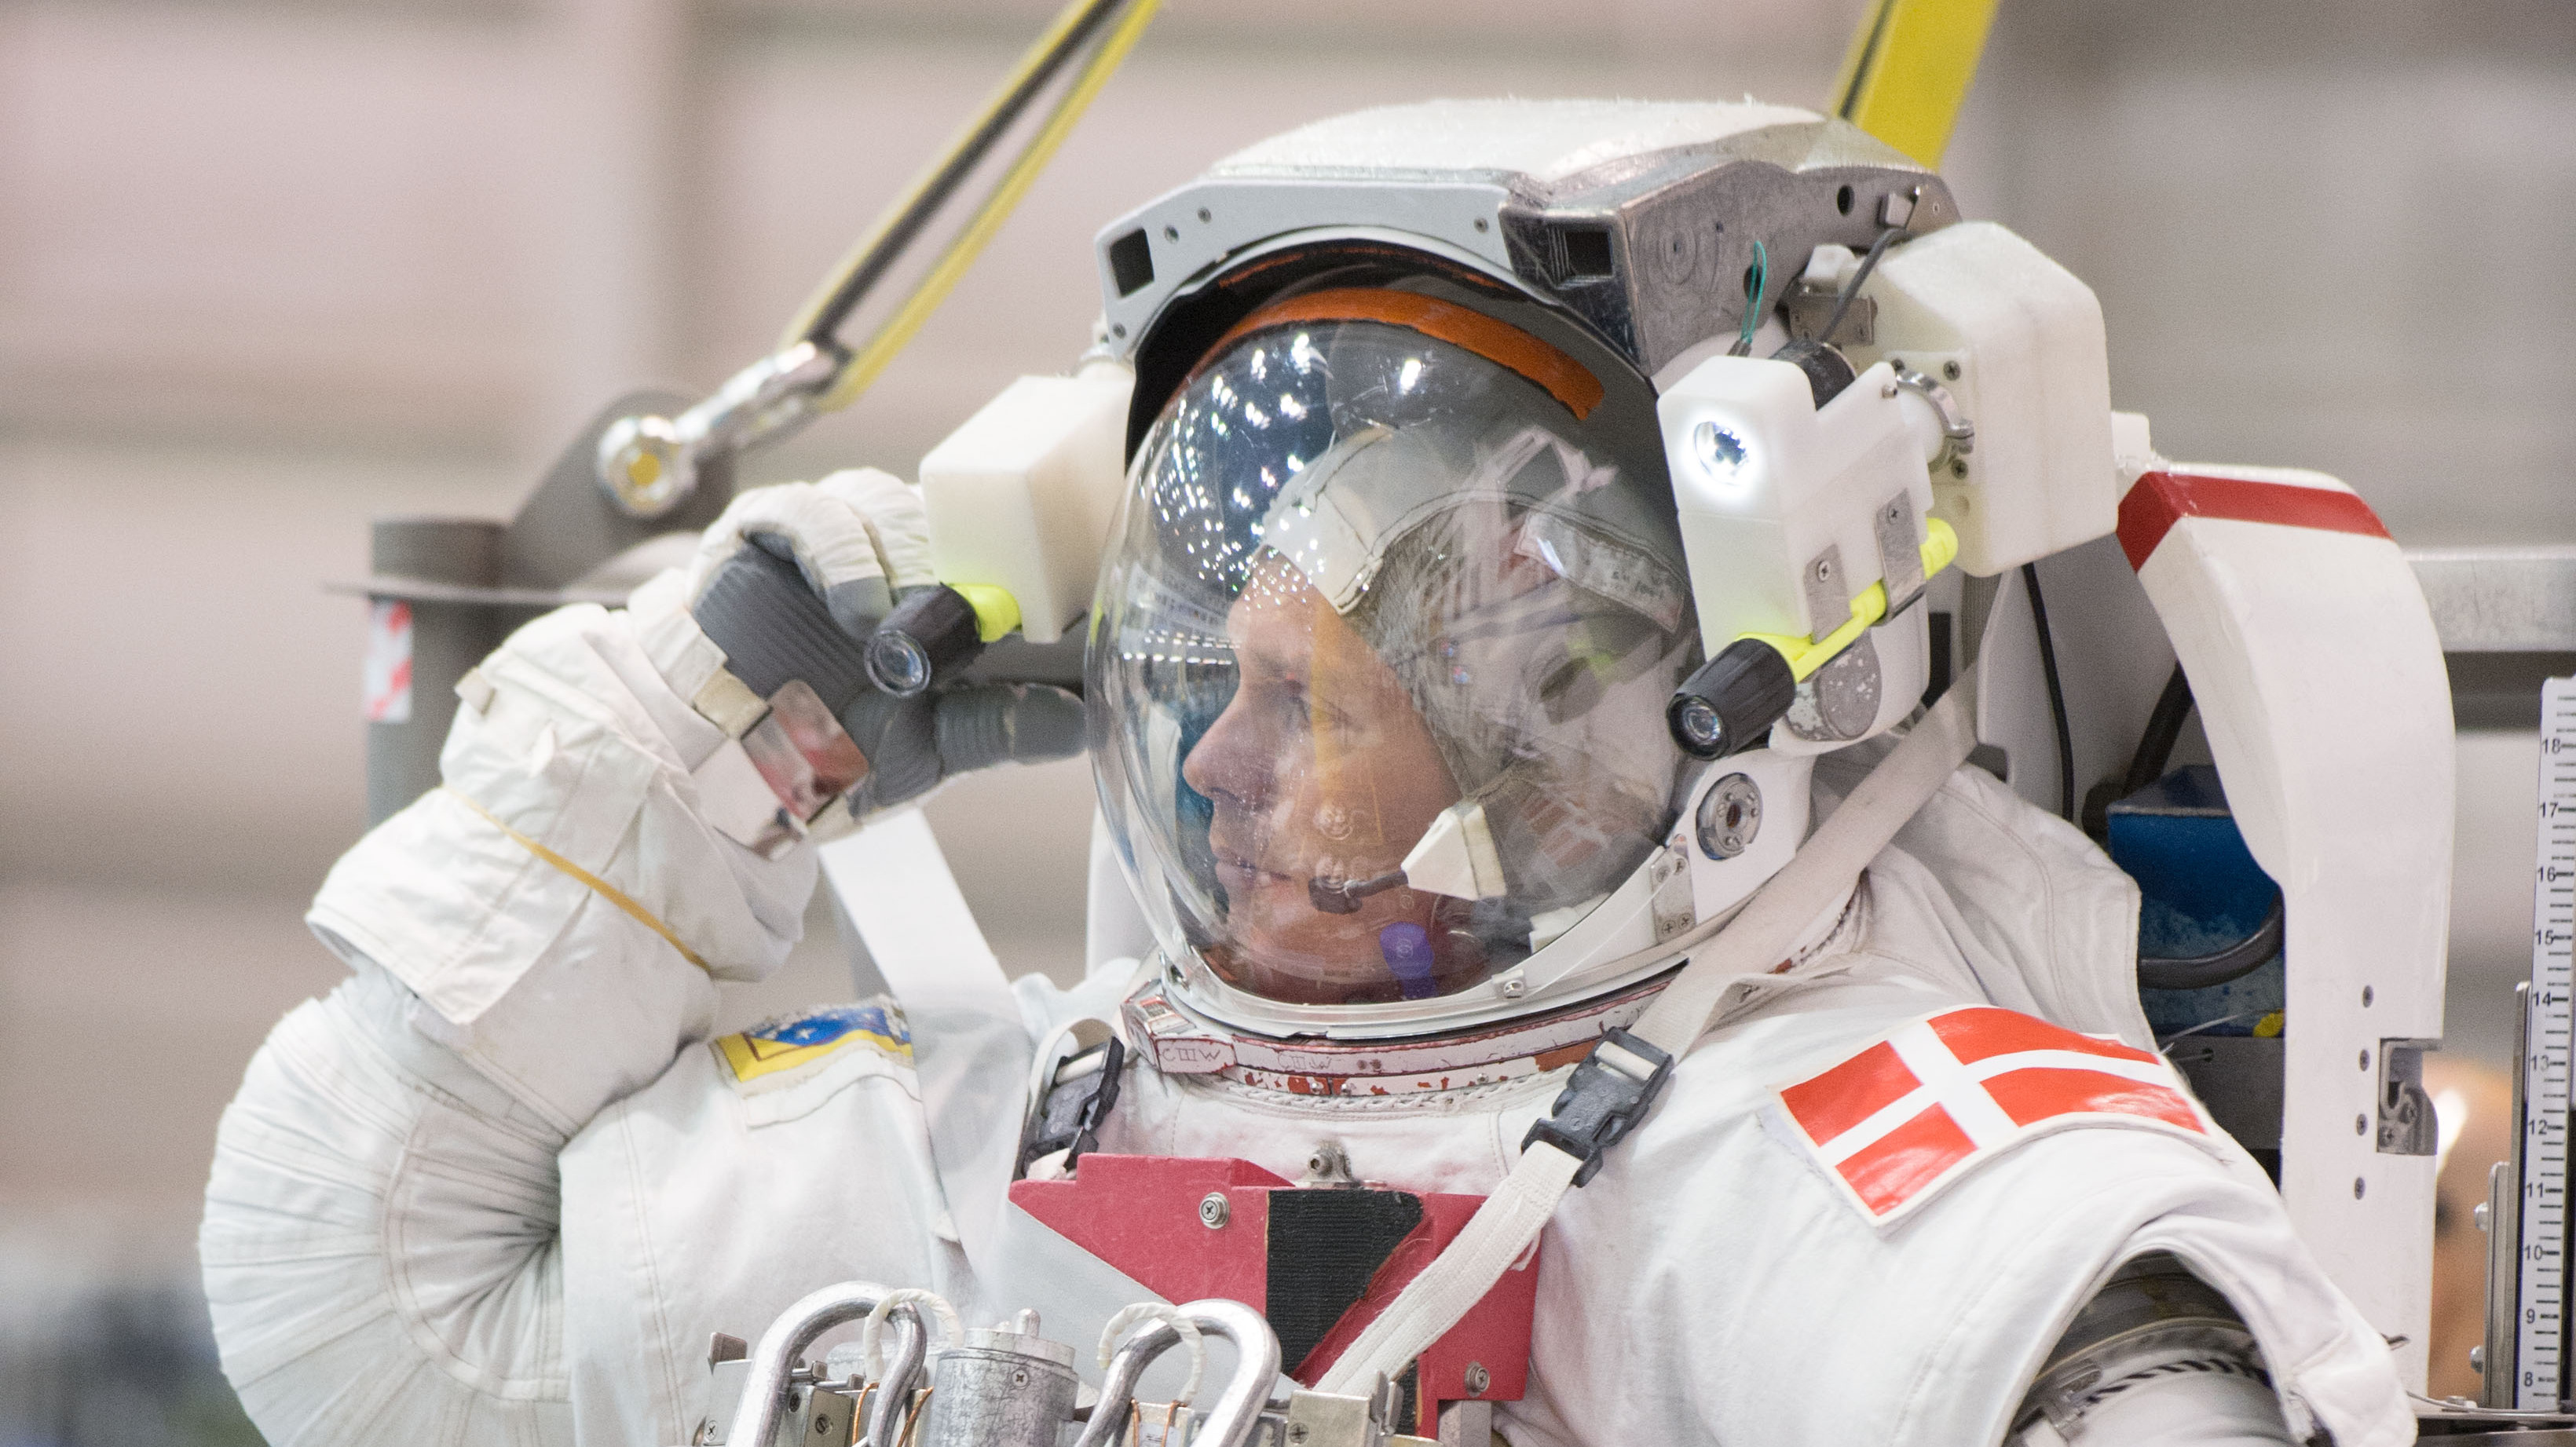 Andreas Mogensen undergoes EVA training at the Johnson Space Center in Houston, Texas. Photo Credit: ESA